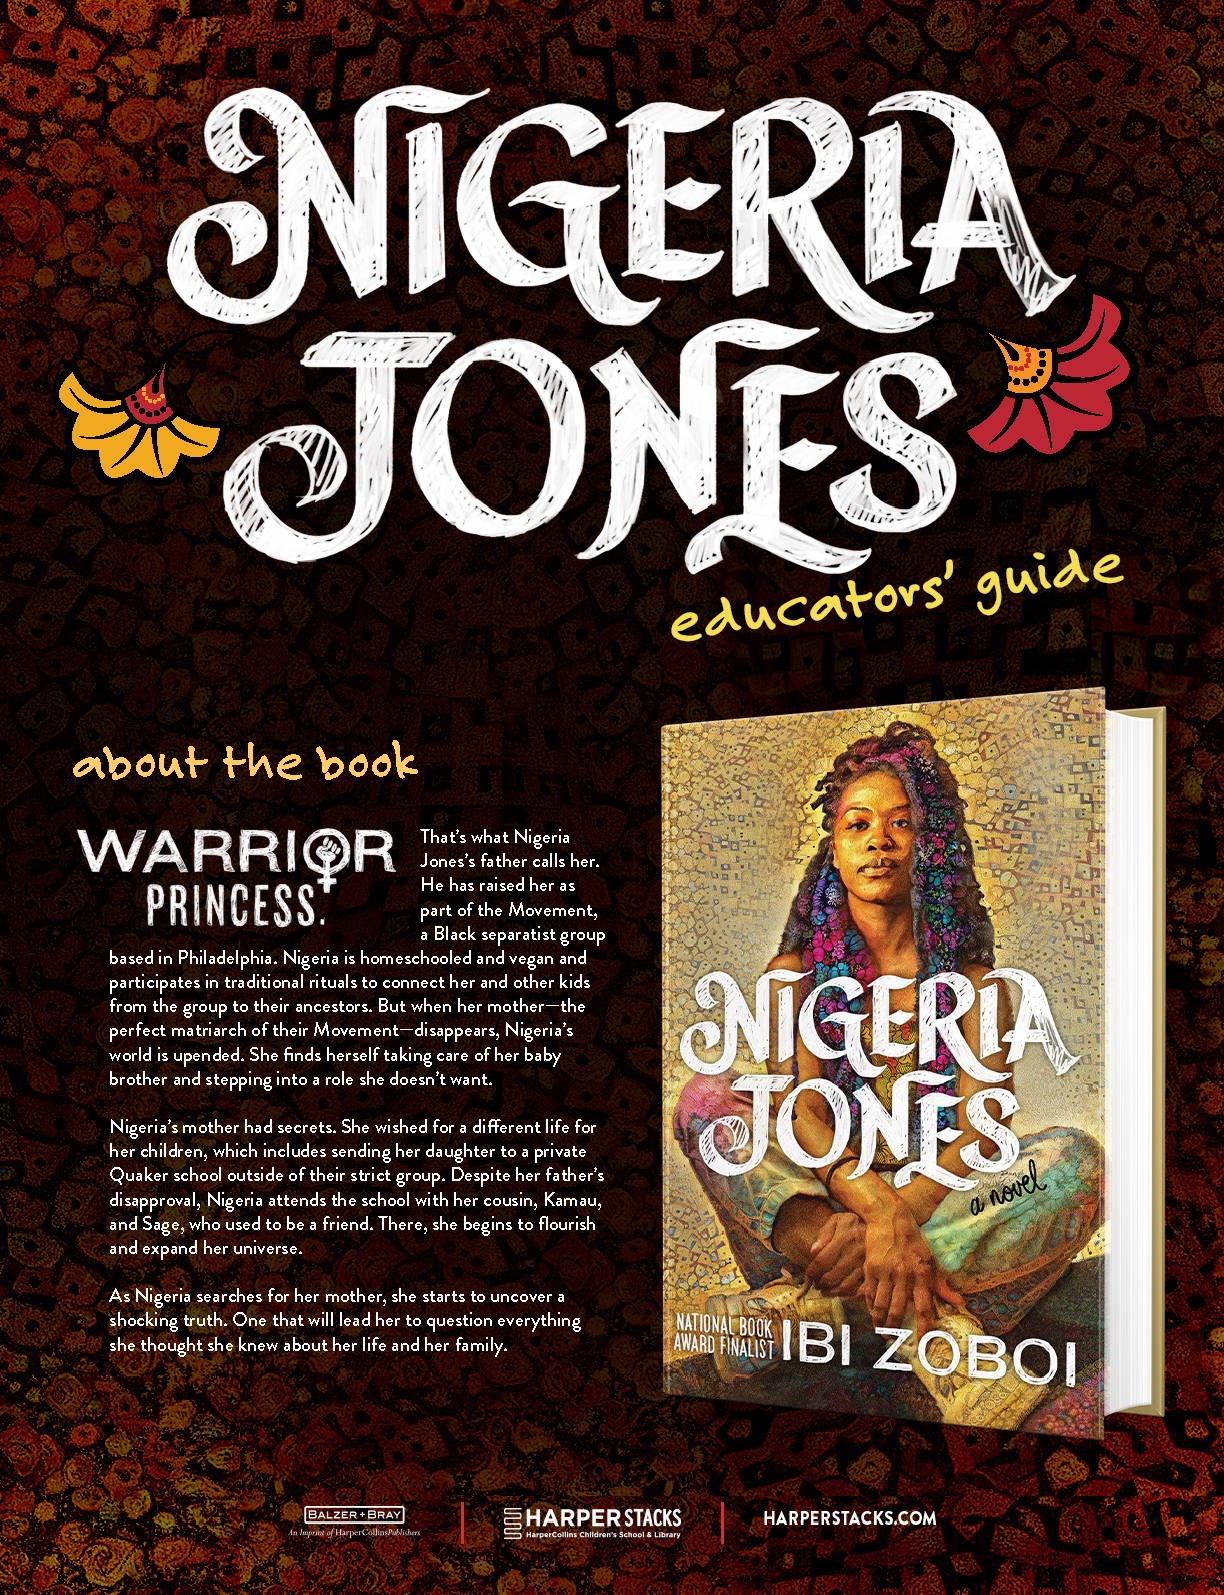 First page of Nigeria Jones Educators' Guide